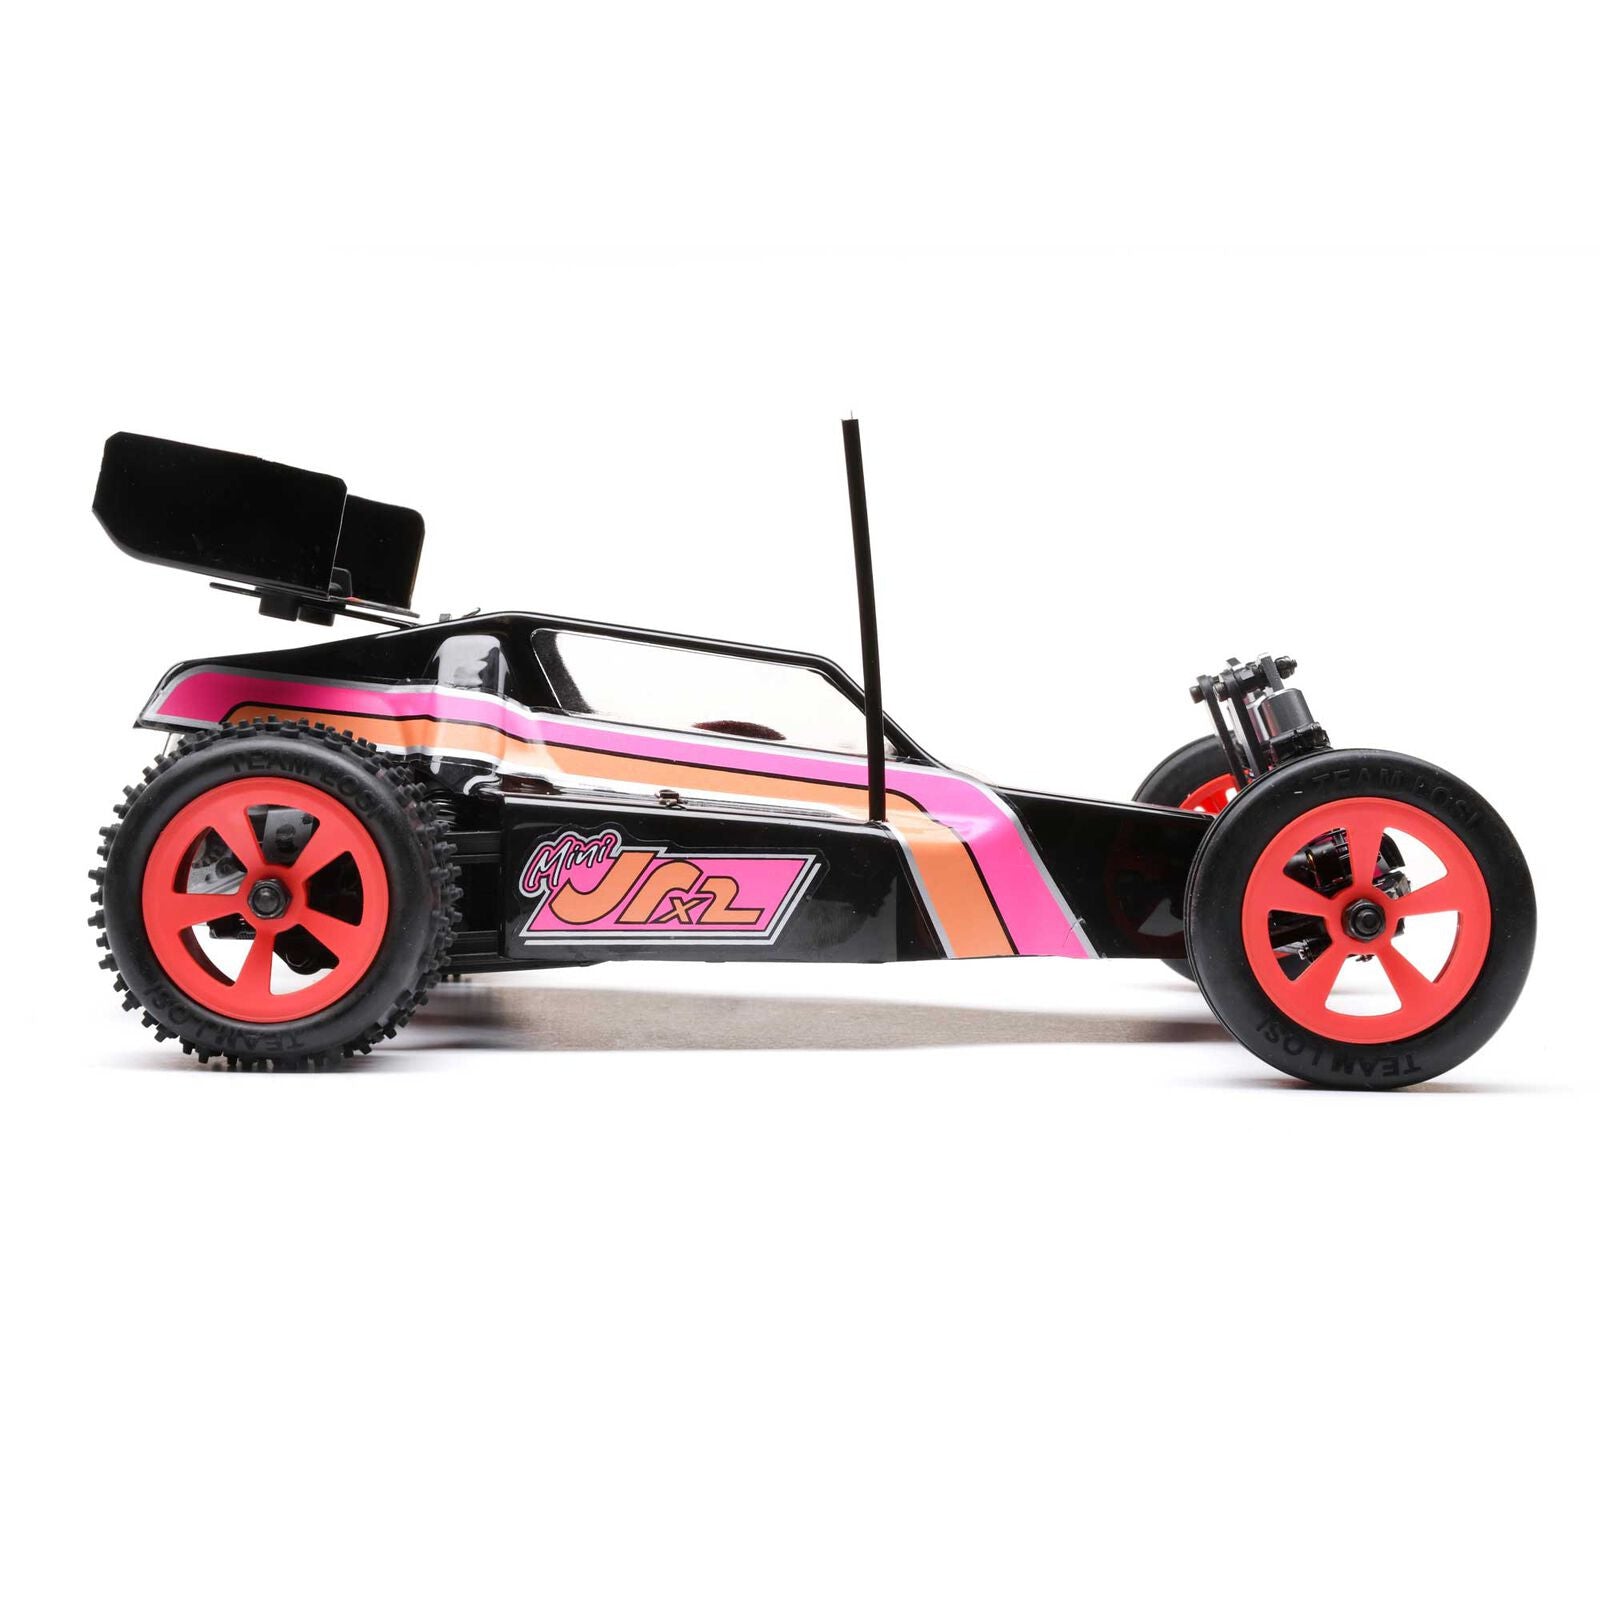 Losi Mini JRX2 Buggy 2wd RTR LOS01020